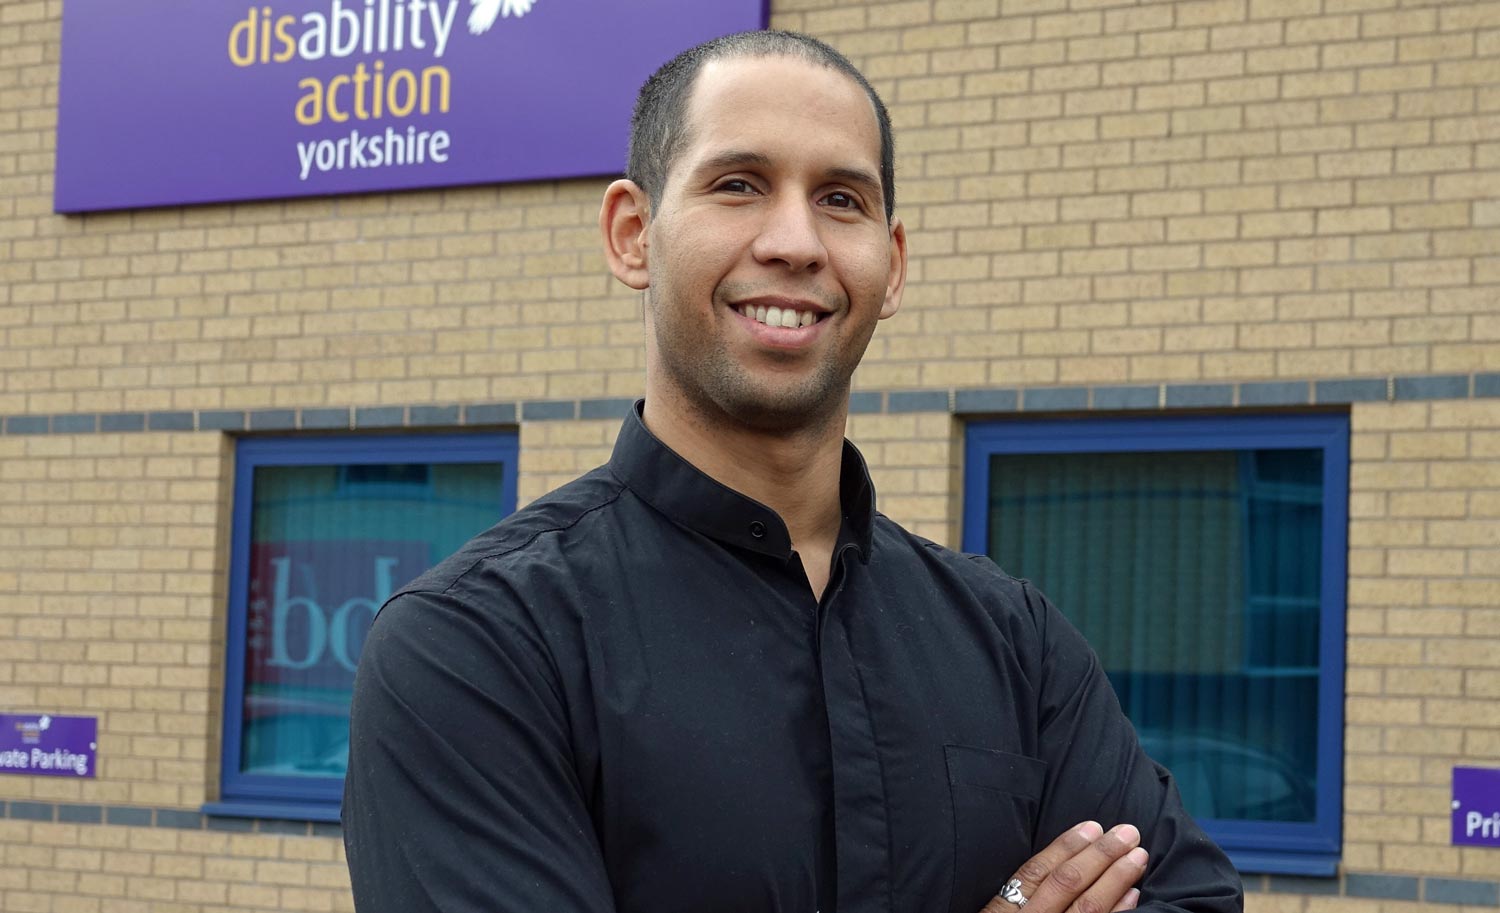 Disability Action Yorkshire job coach Anthony Longmires